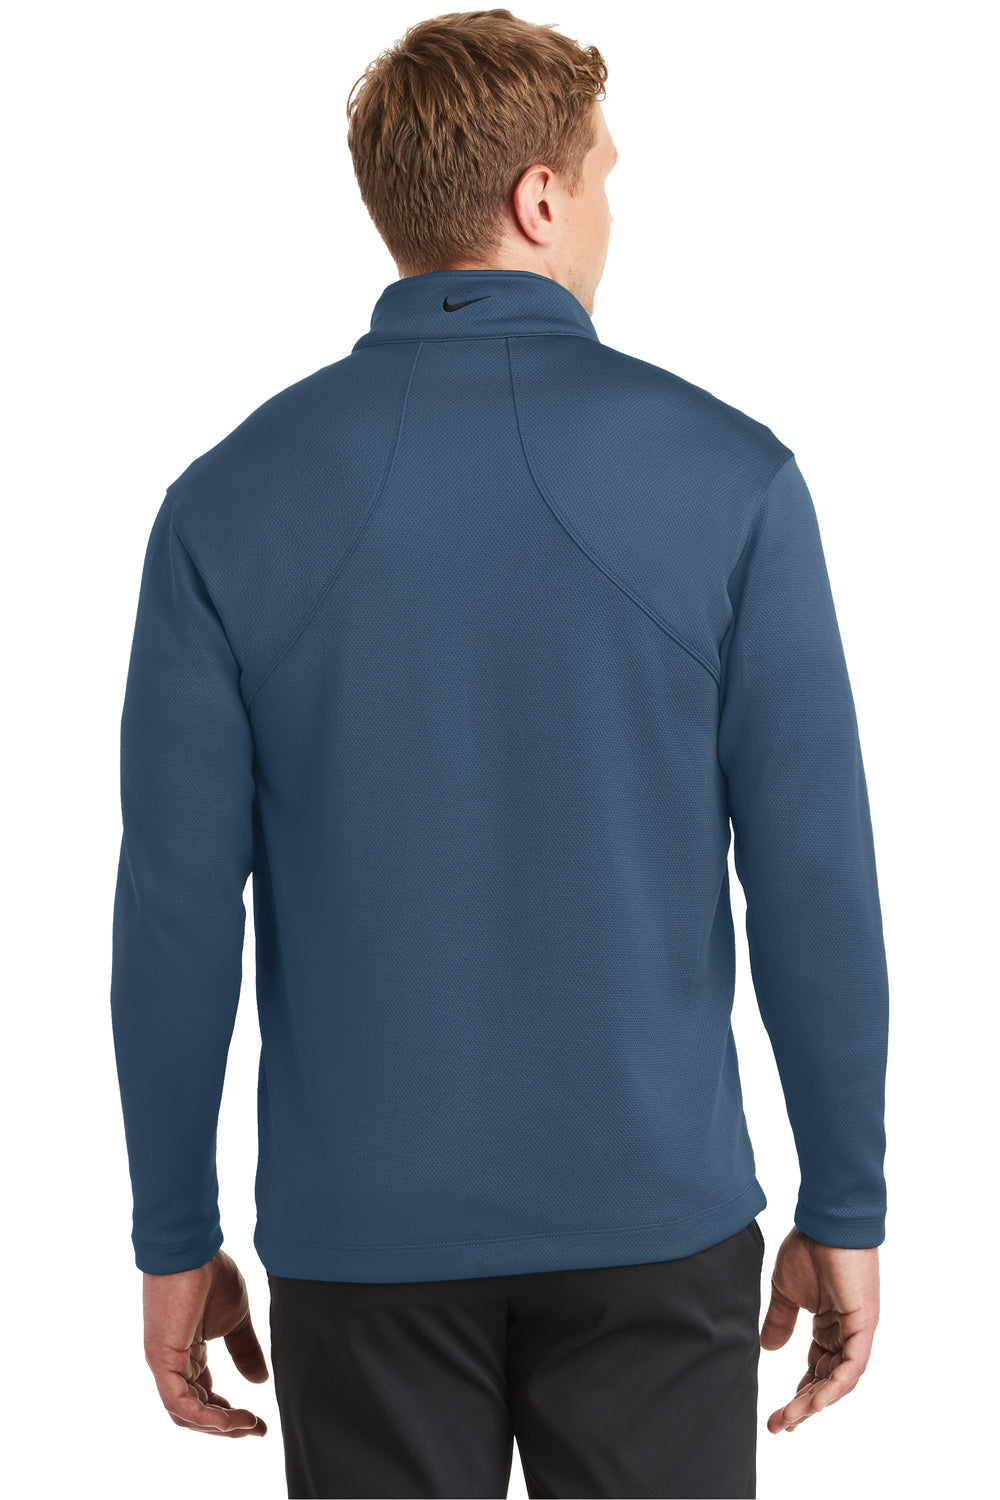 Nike 400099 Mens 1/4 Zip Sweatshirt Starlight Blue Model Back